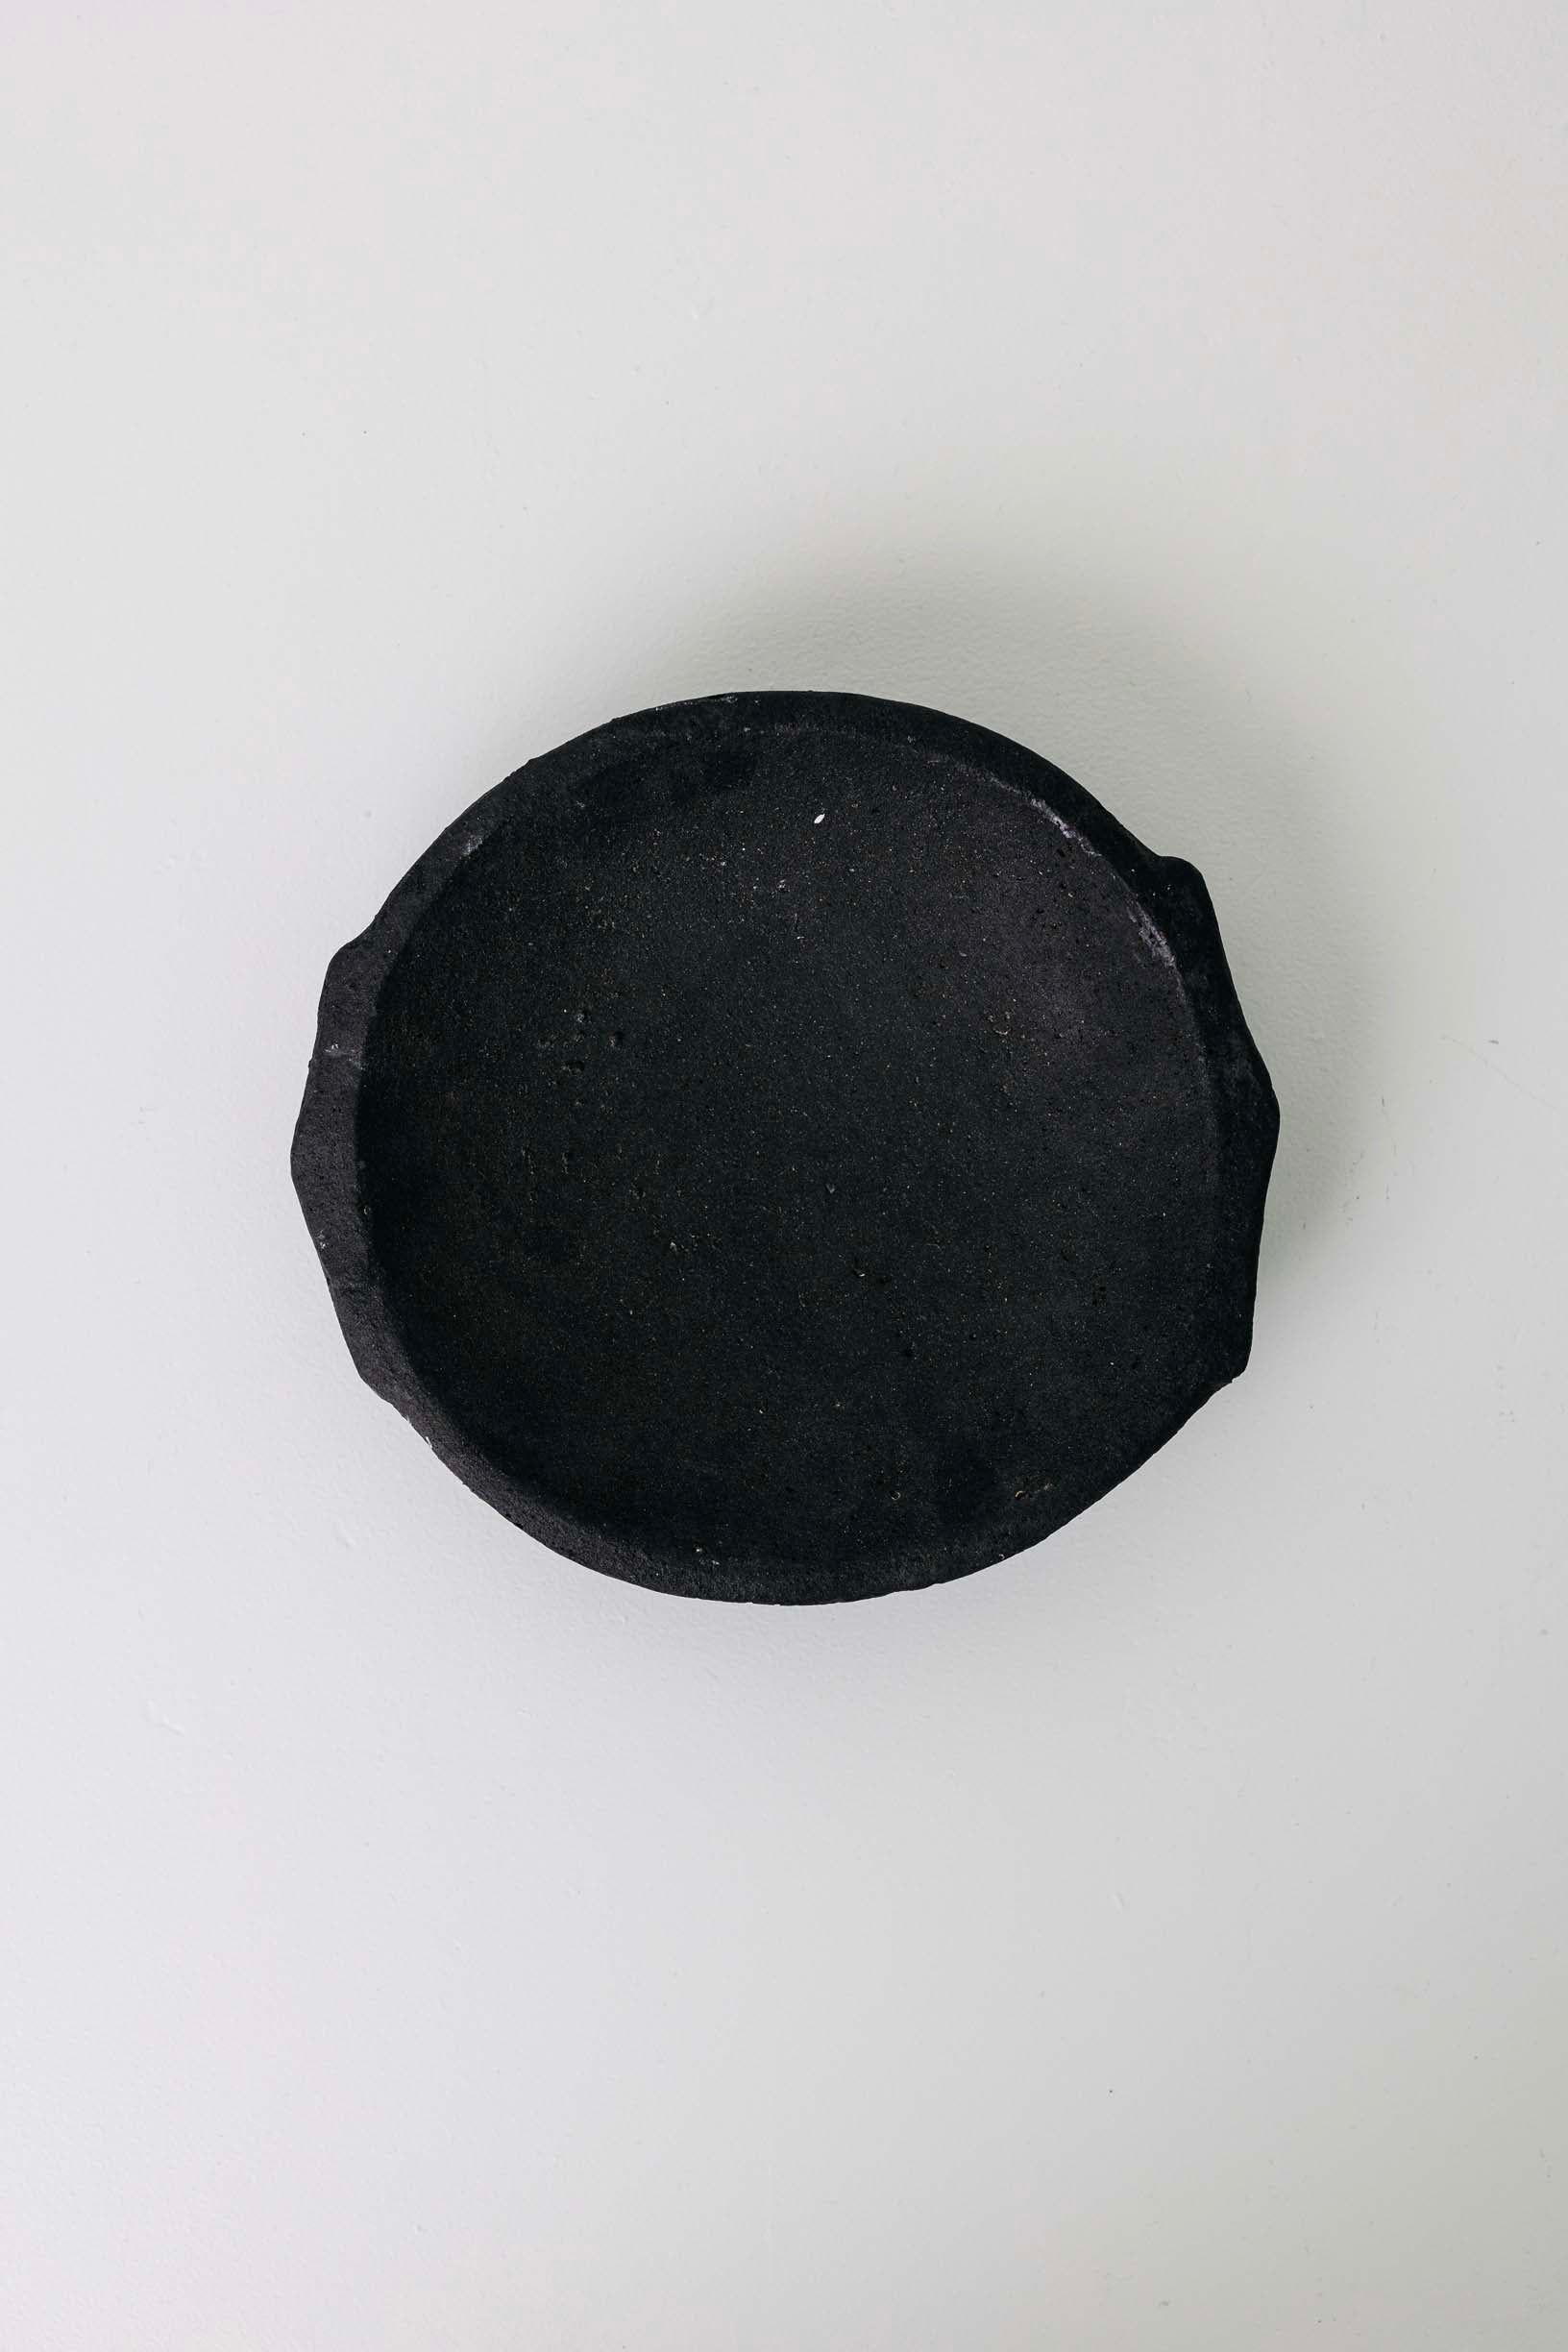 Leith Stone Saucer - Black